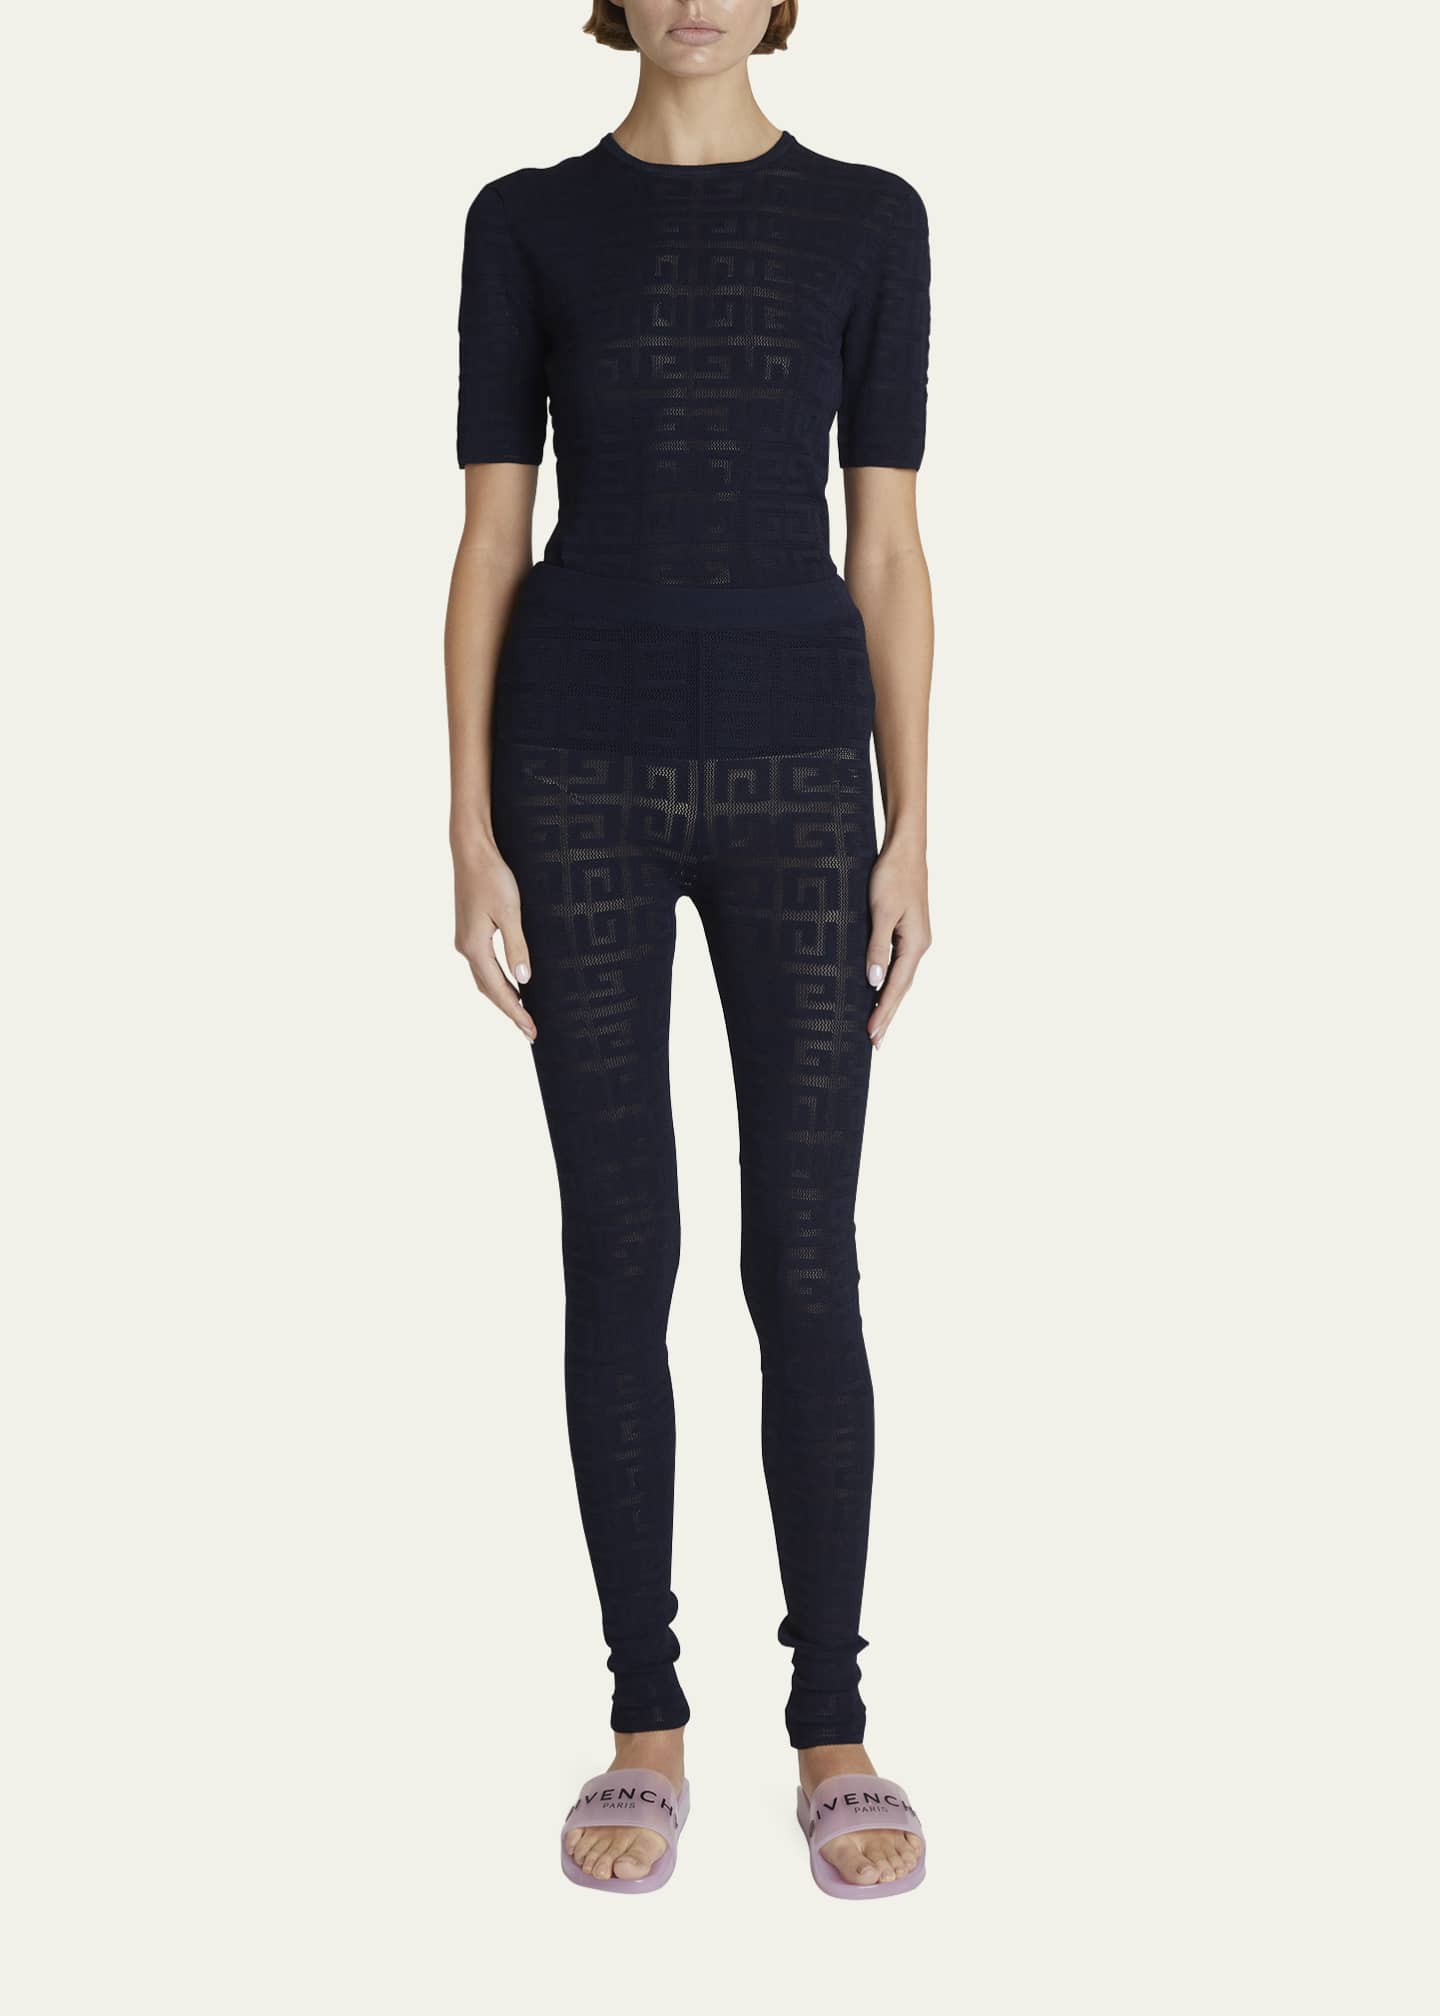 Givenchy 4G Jacquard Transparent Legging in Black